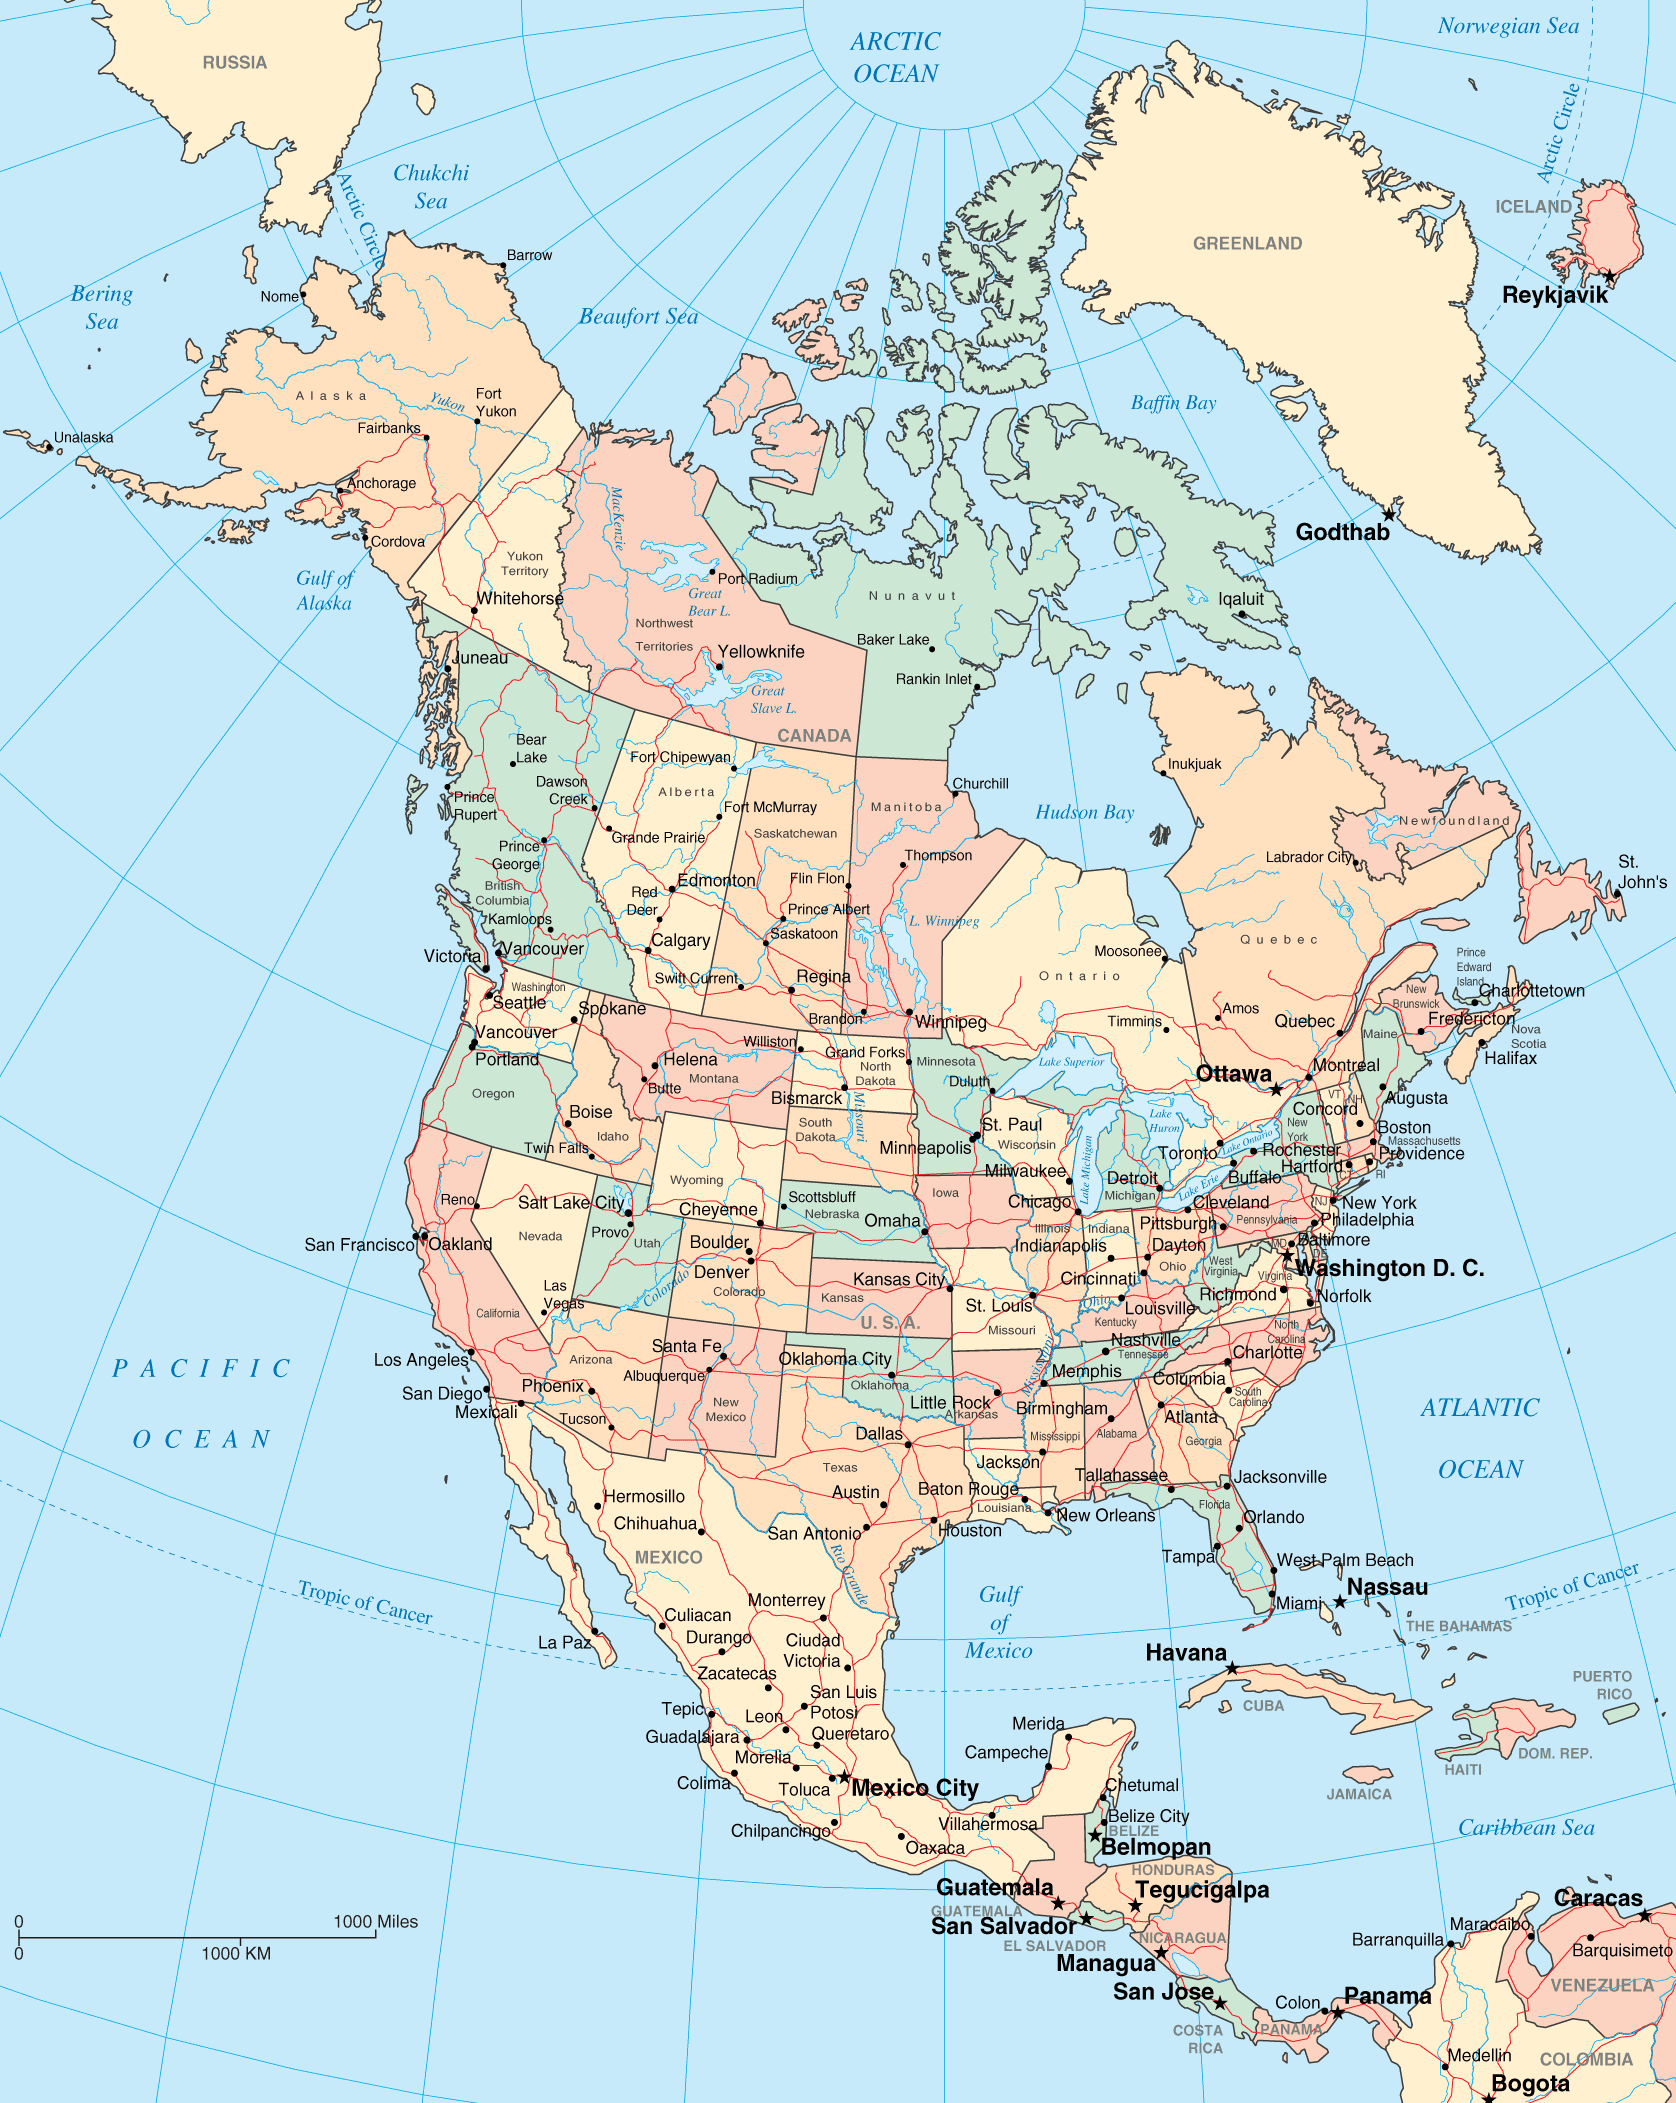 Mapa Político de América del Norte - Tamaño completo | Gifex